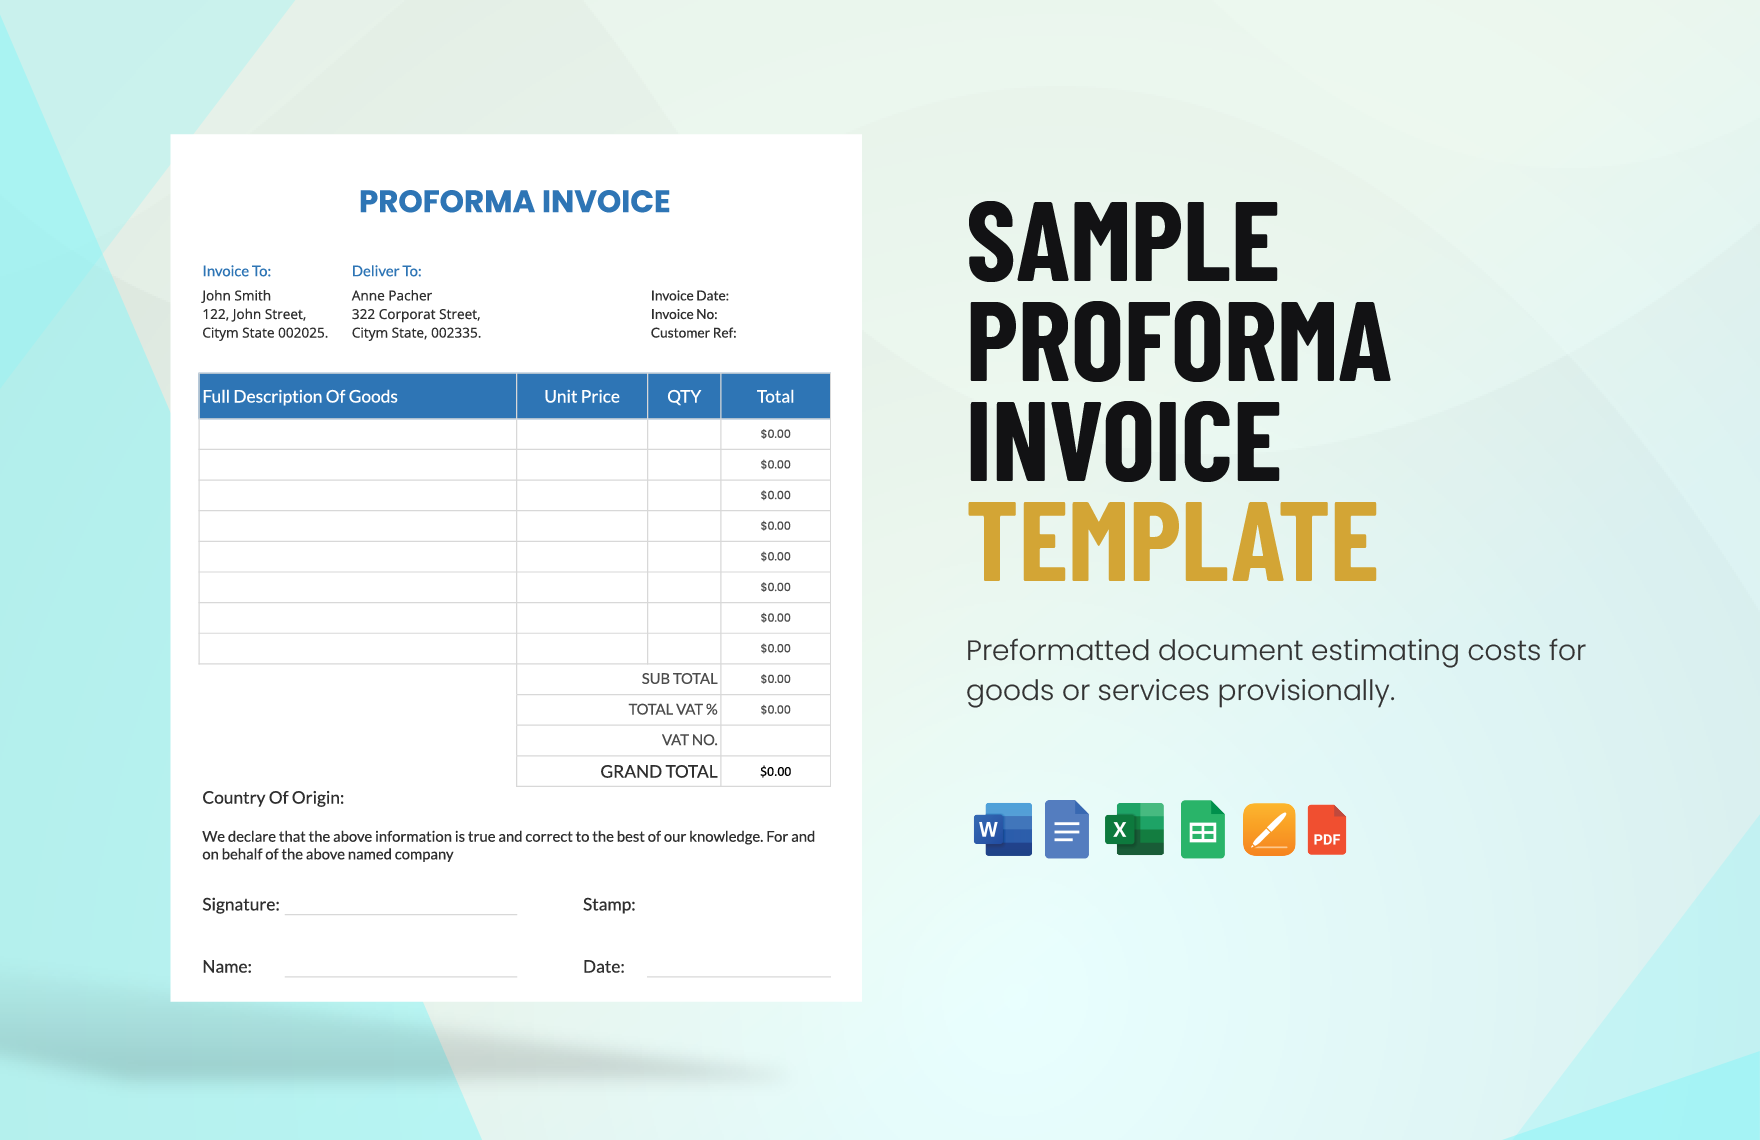 Sample Proforma Invoice Template